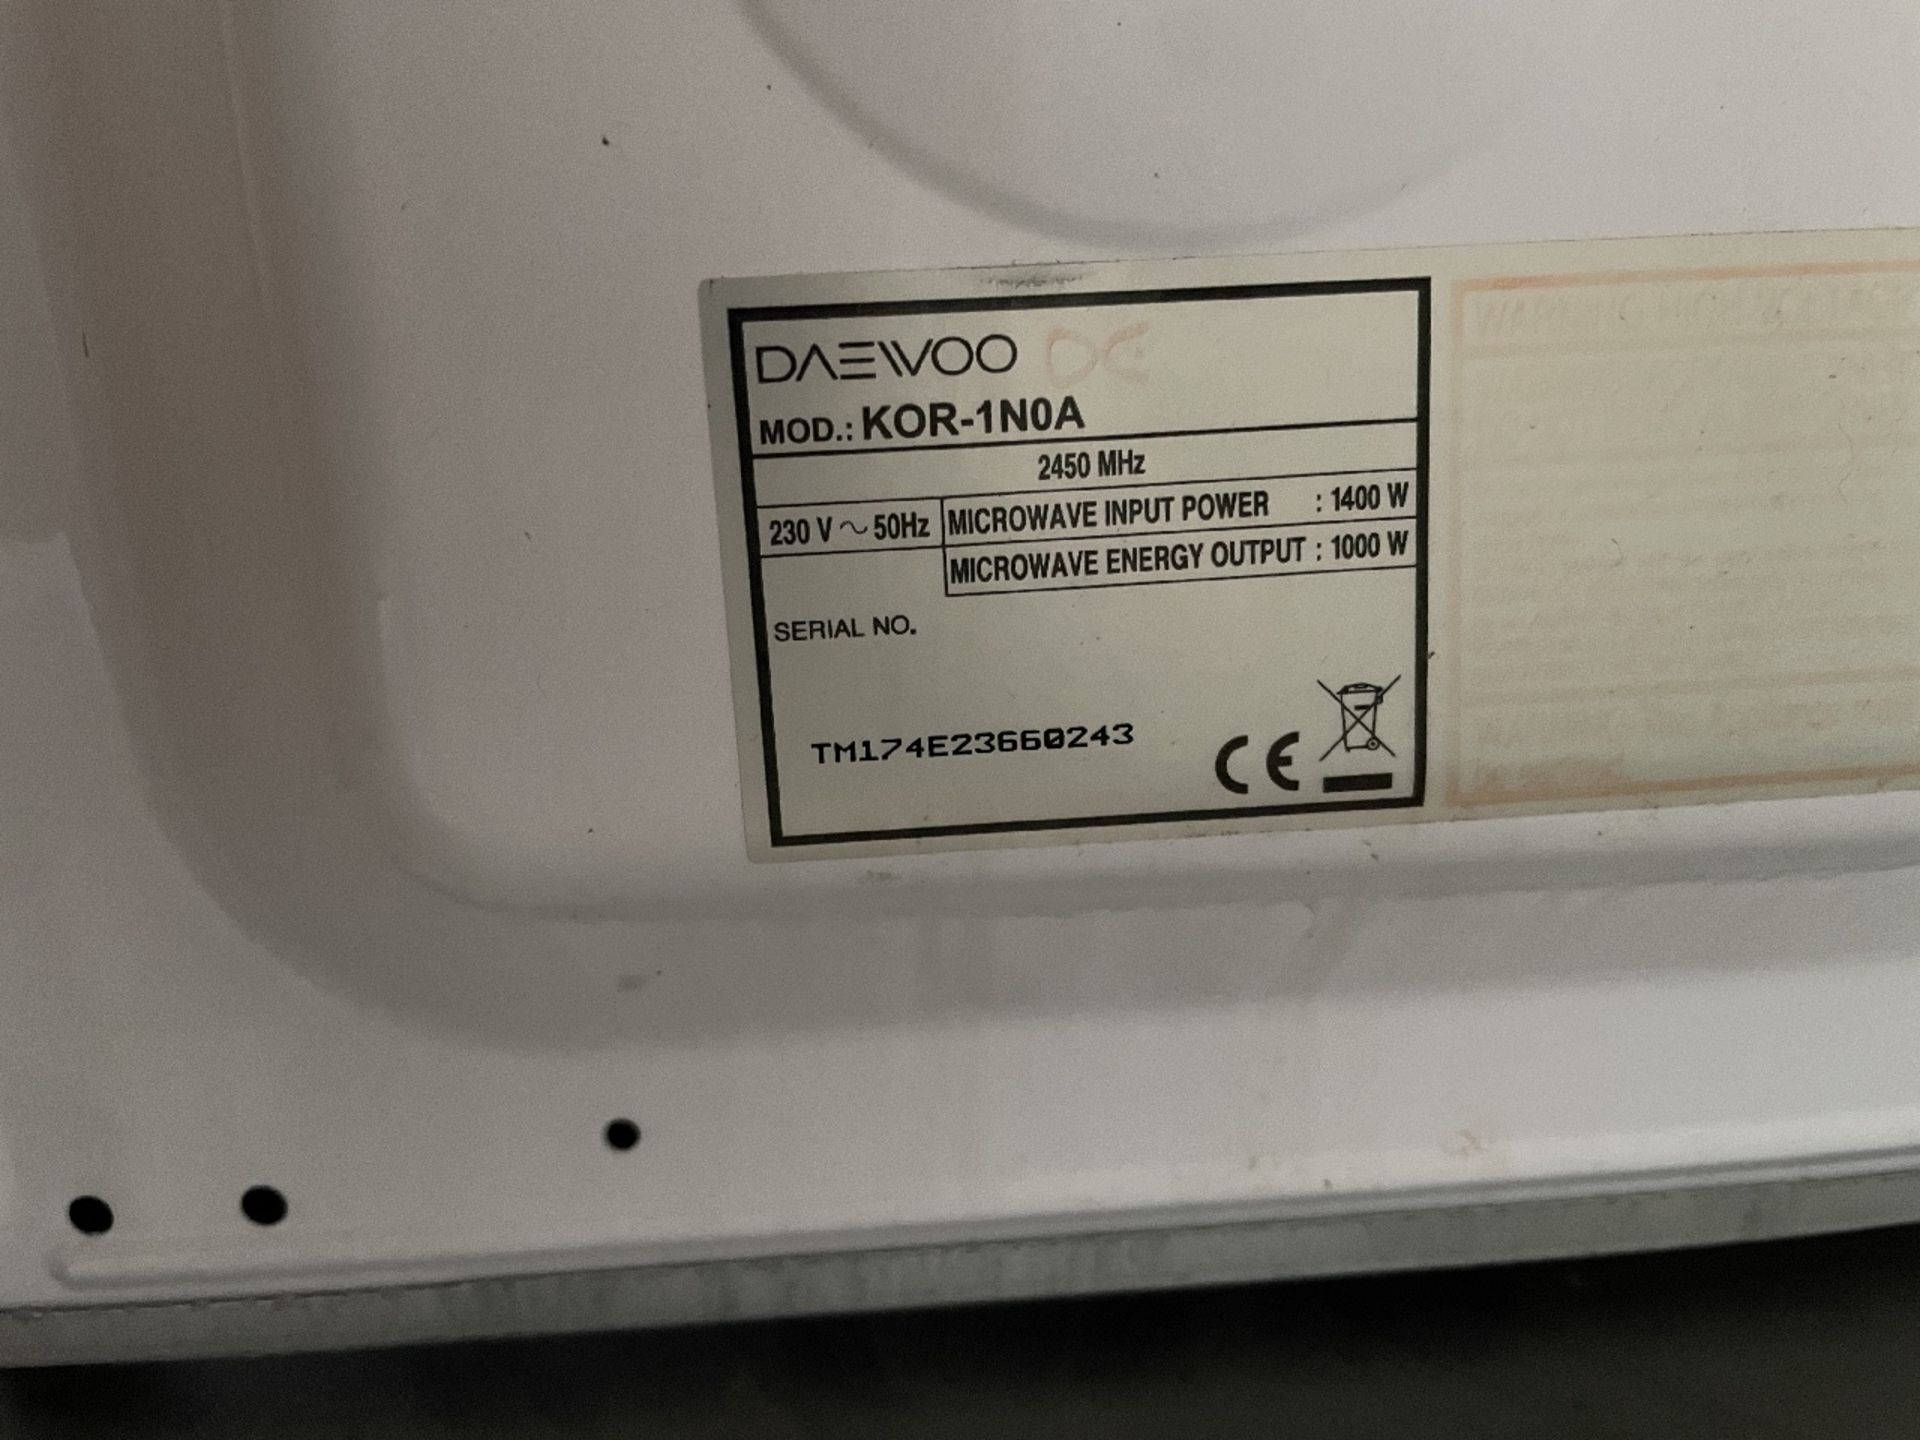 Daewoo KOR-1NOA Microwave - Image 2 of 2